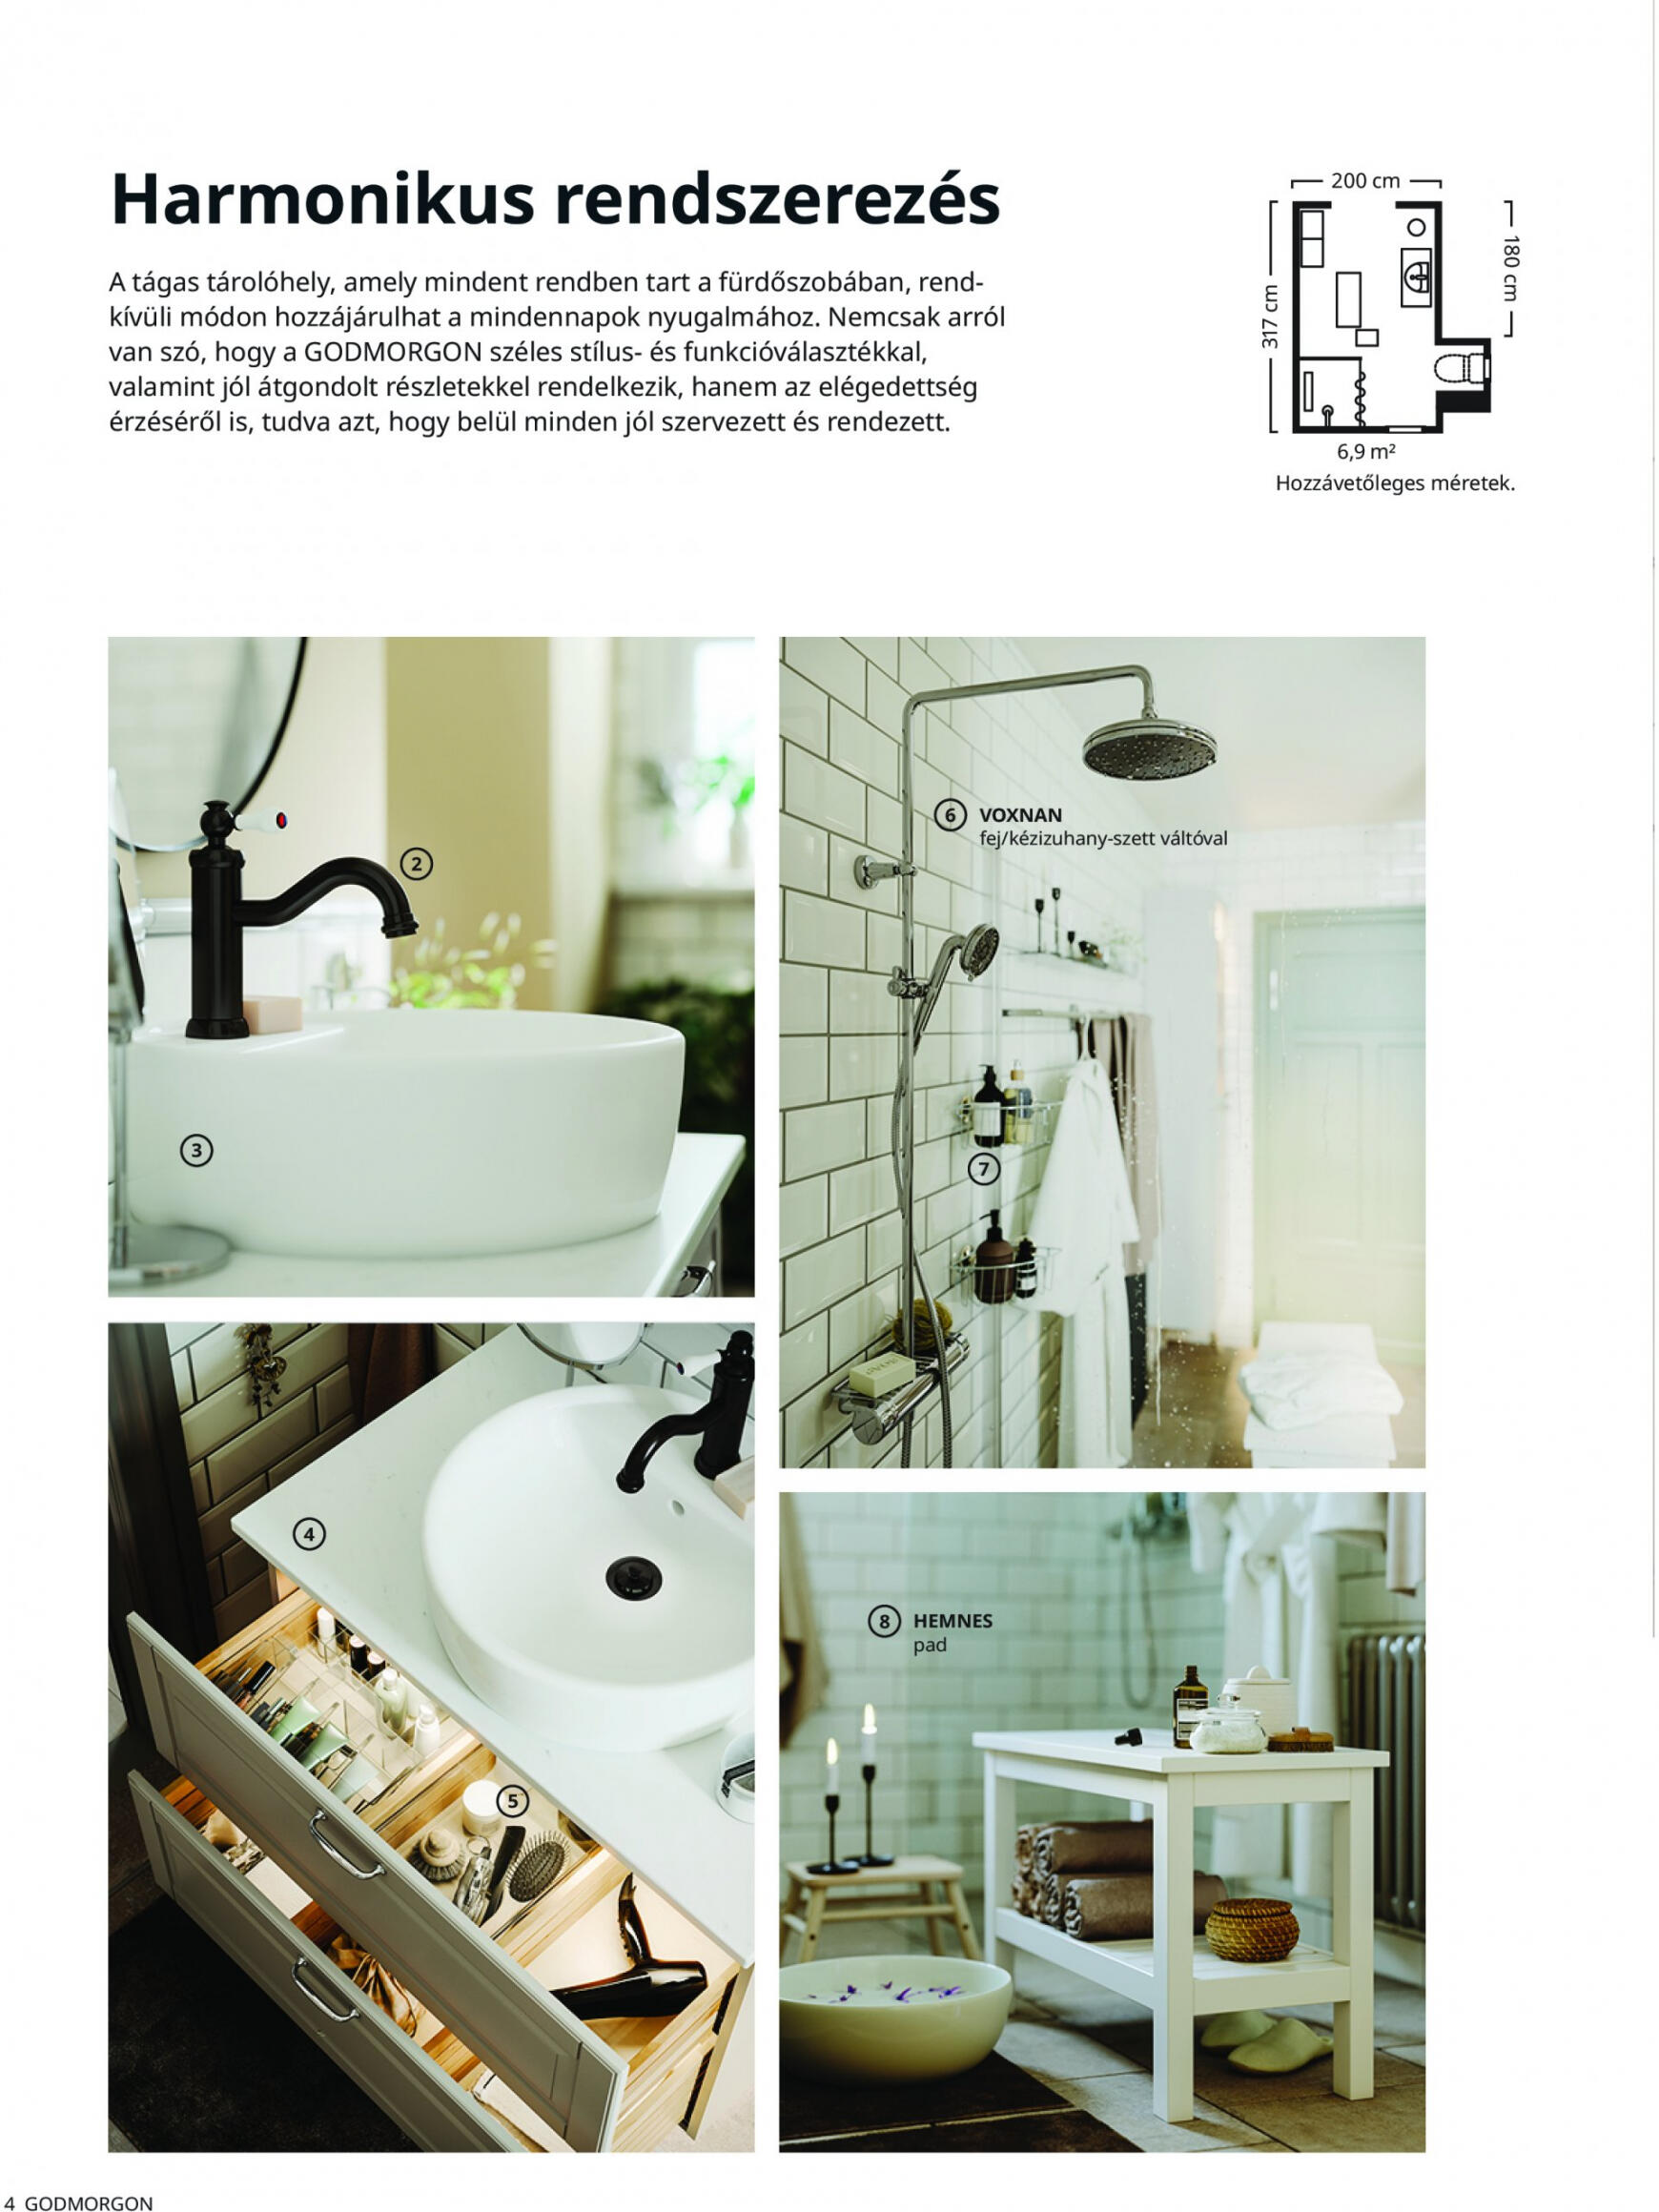 ikea - IKEA újság hétfőtől 09.26. - page: 4